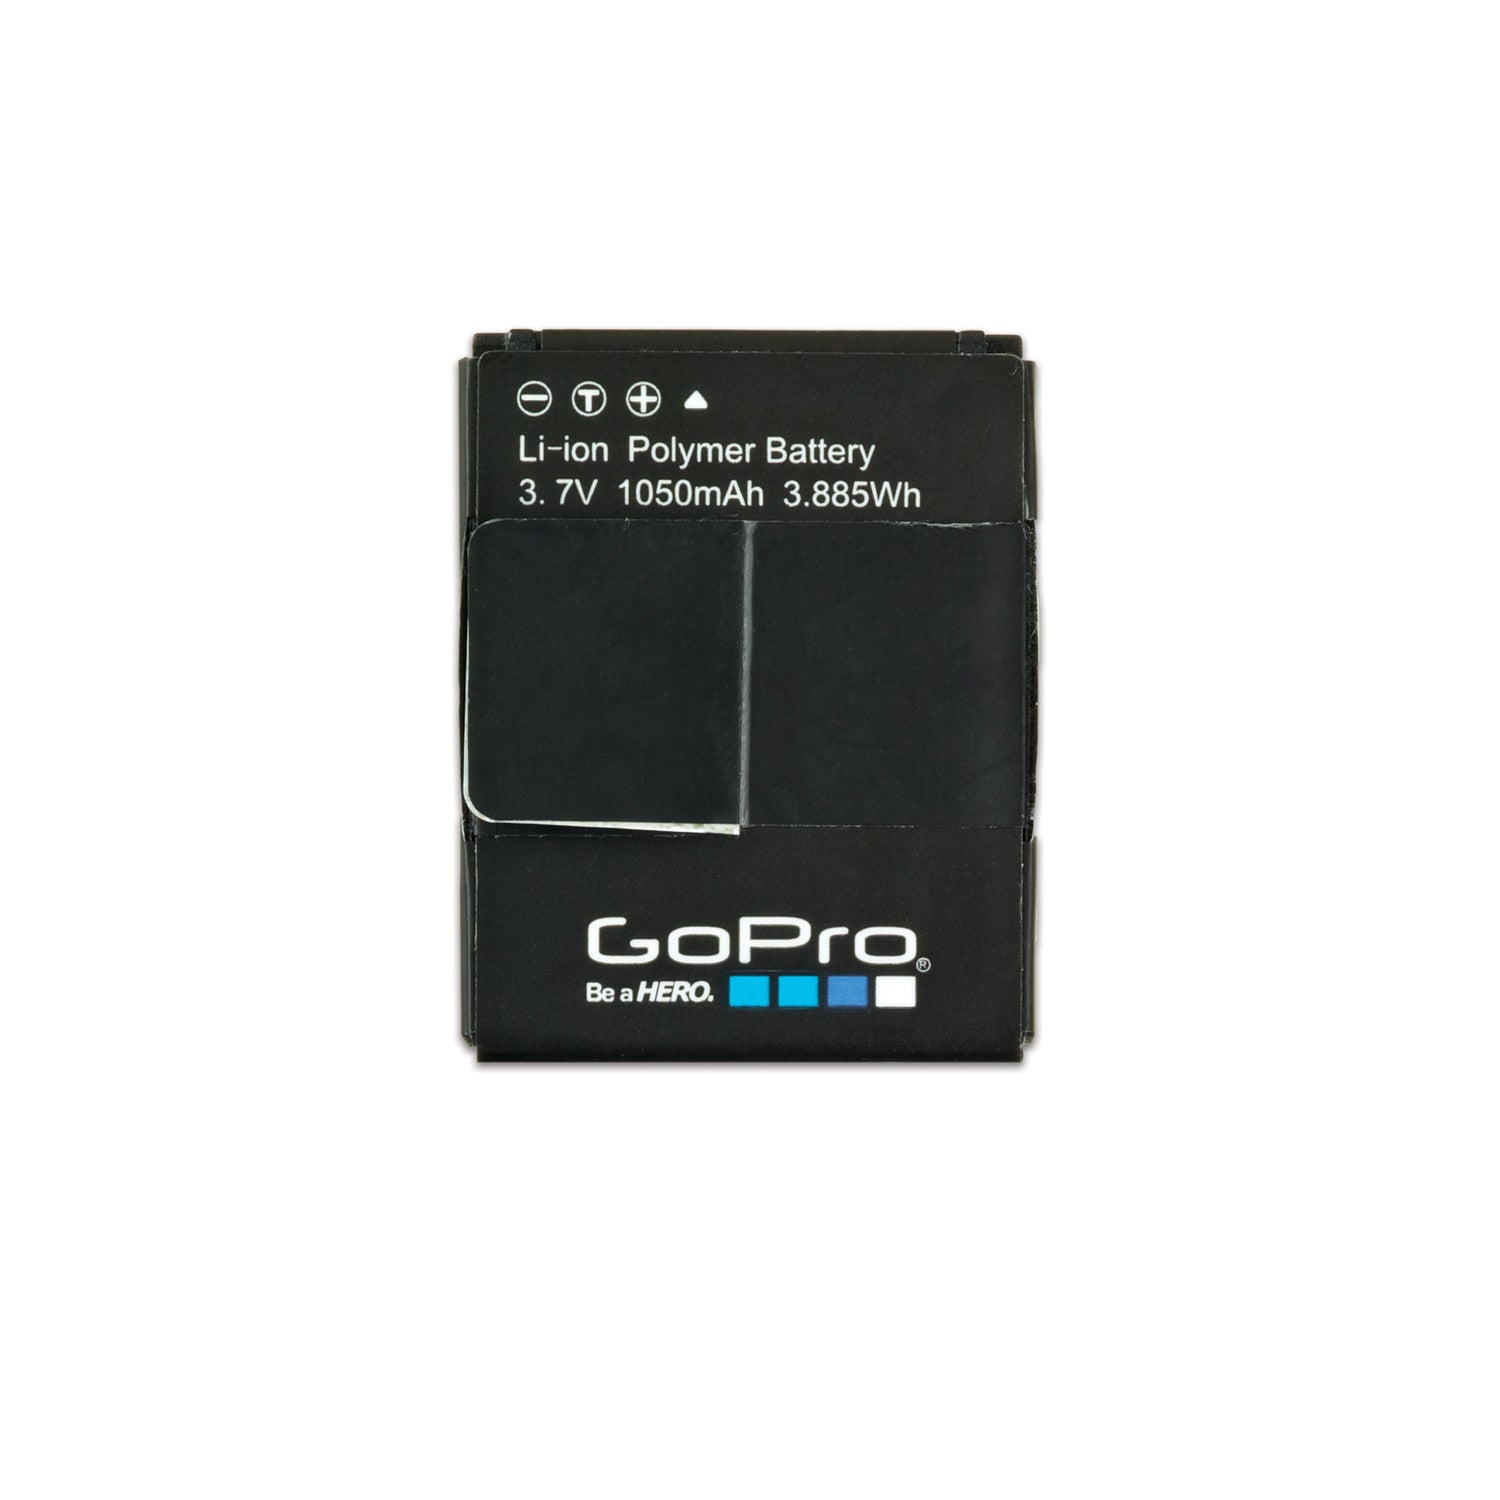 GoPro Recharable Li-Ion Battery HERO3 / 3+, video gopro mounts, GoPro - Pictureline  - 1